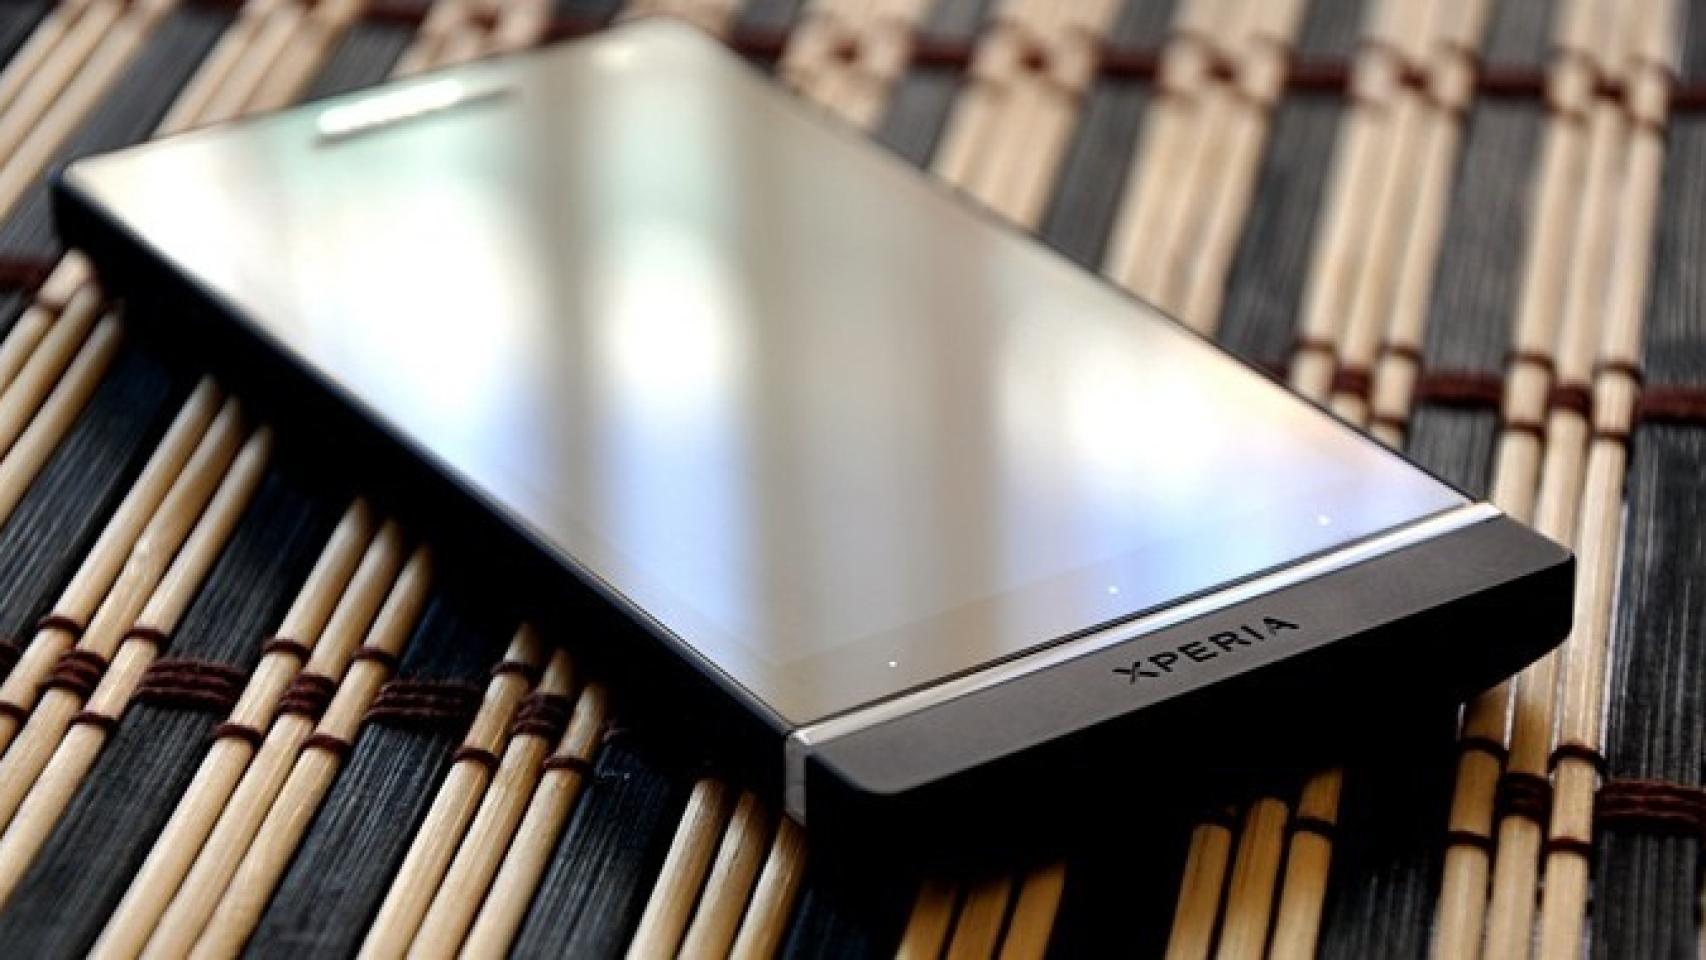 Videoreview del Sony Xperia S